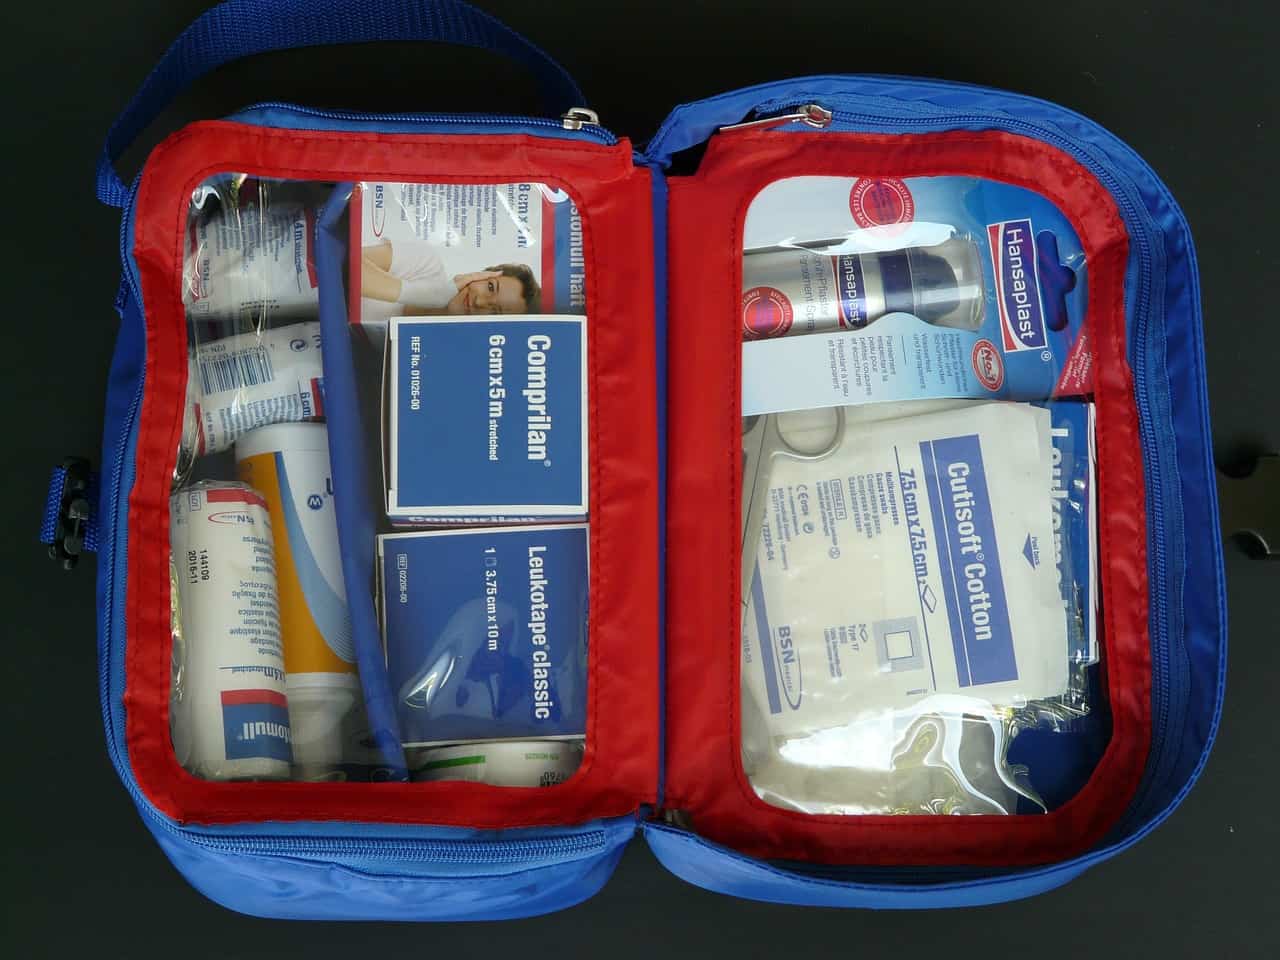 How Do You Make A Homemade First Aid Kit?